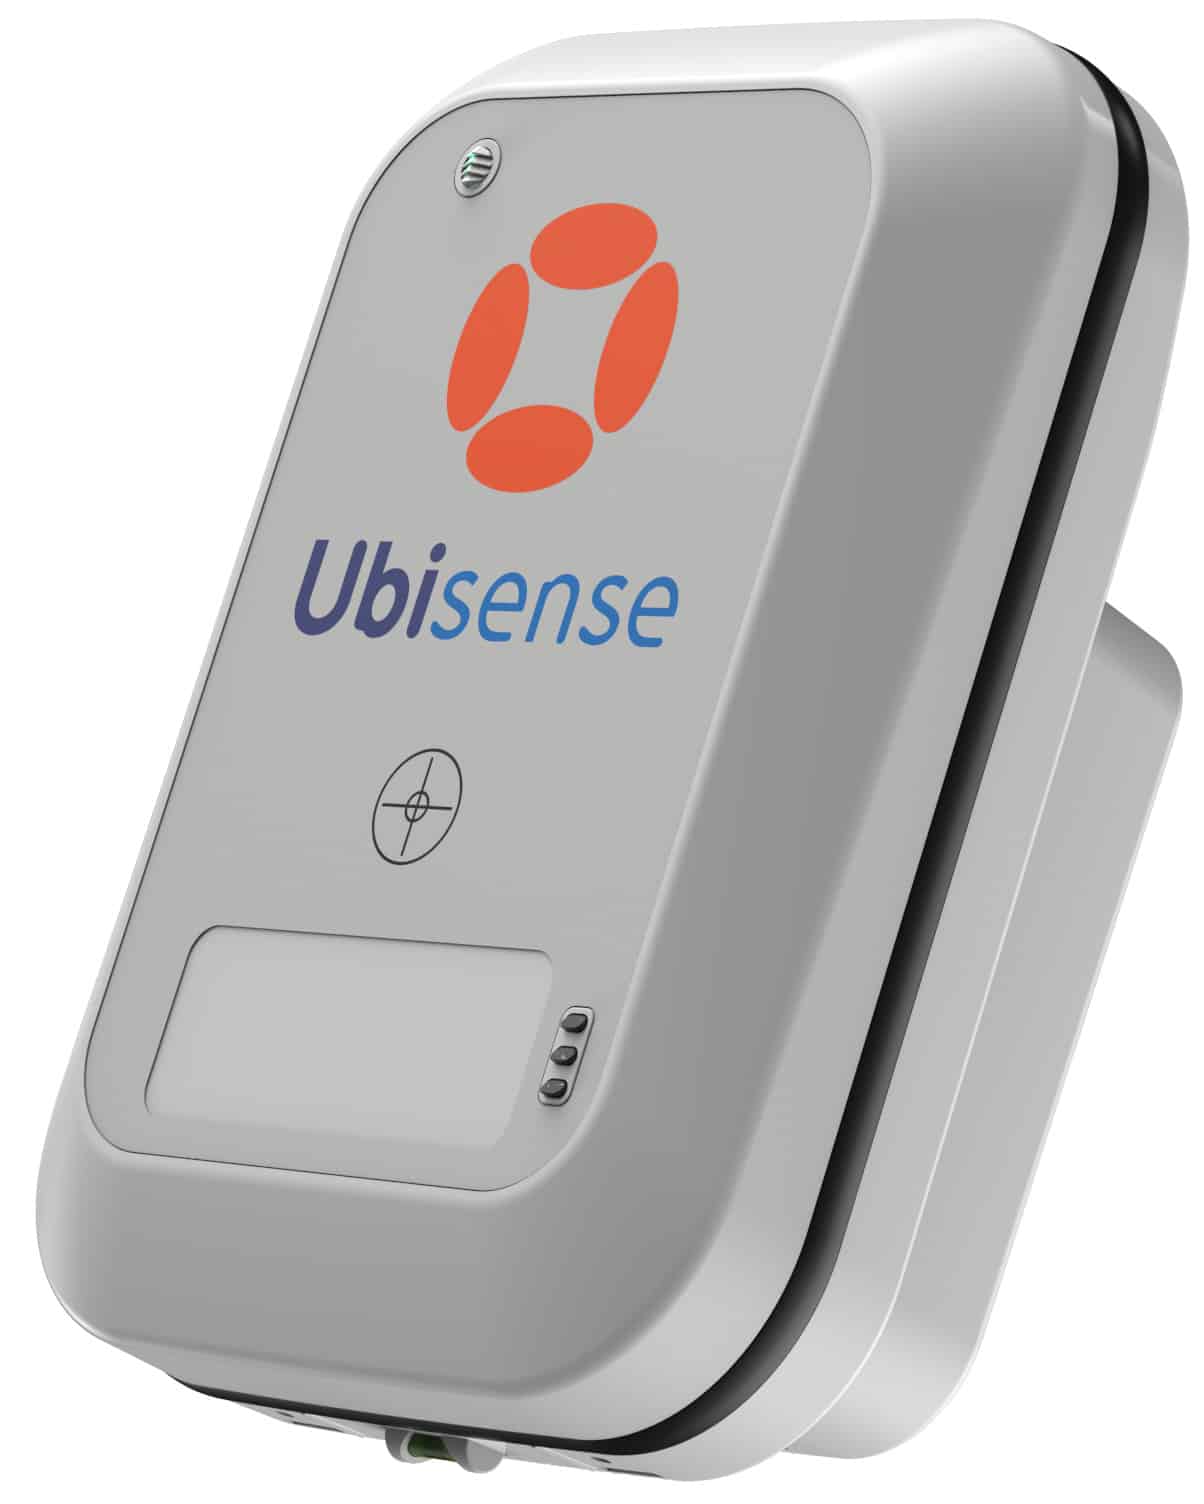 ubisense-location-tracker-product-design